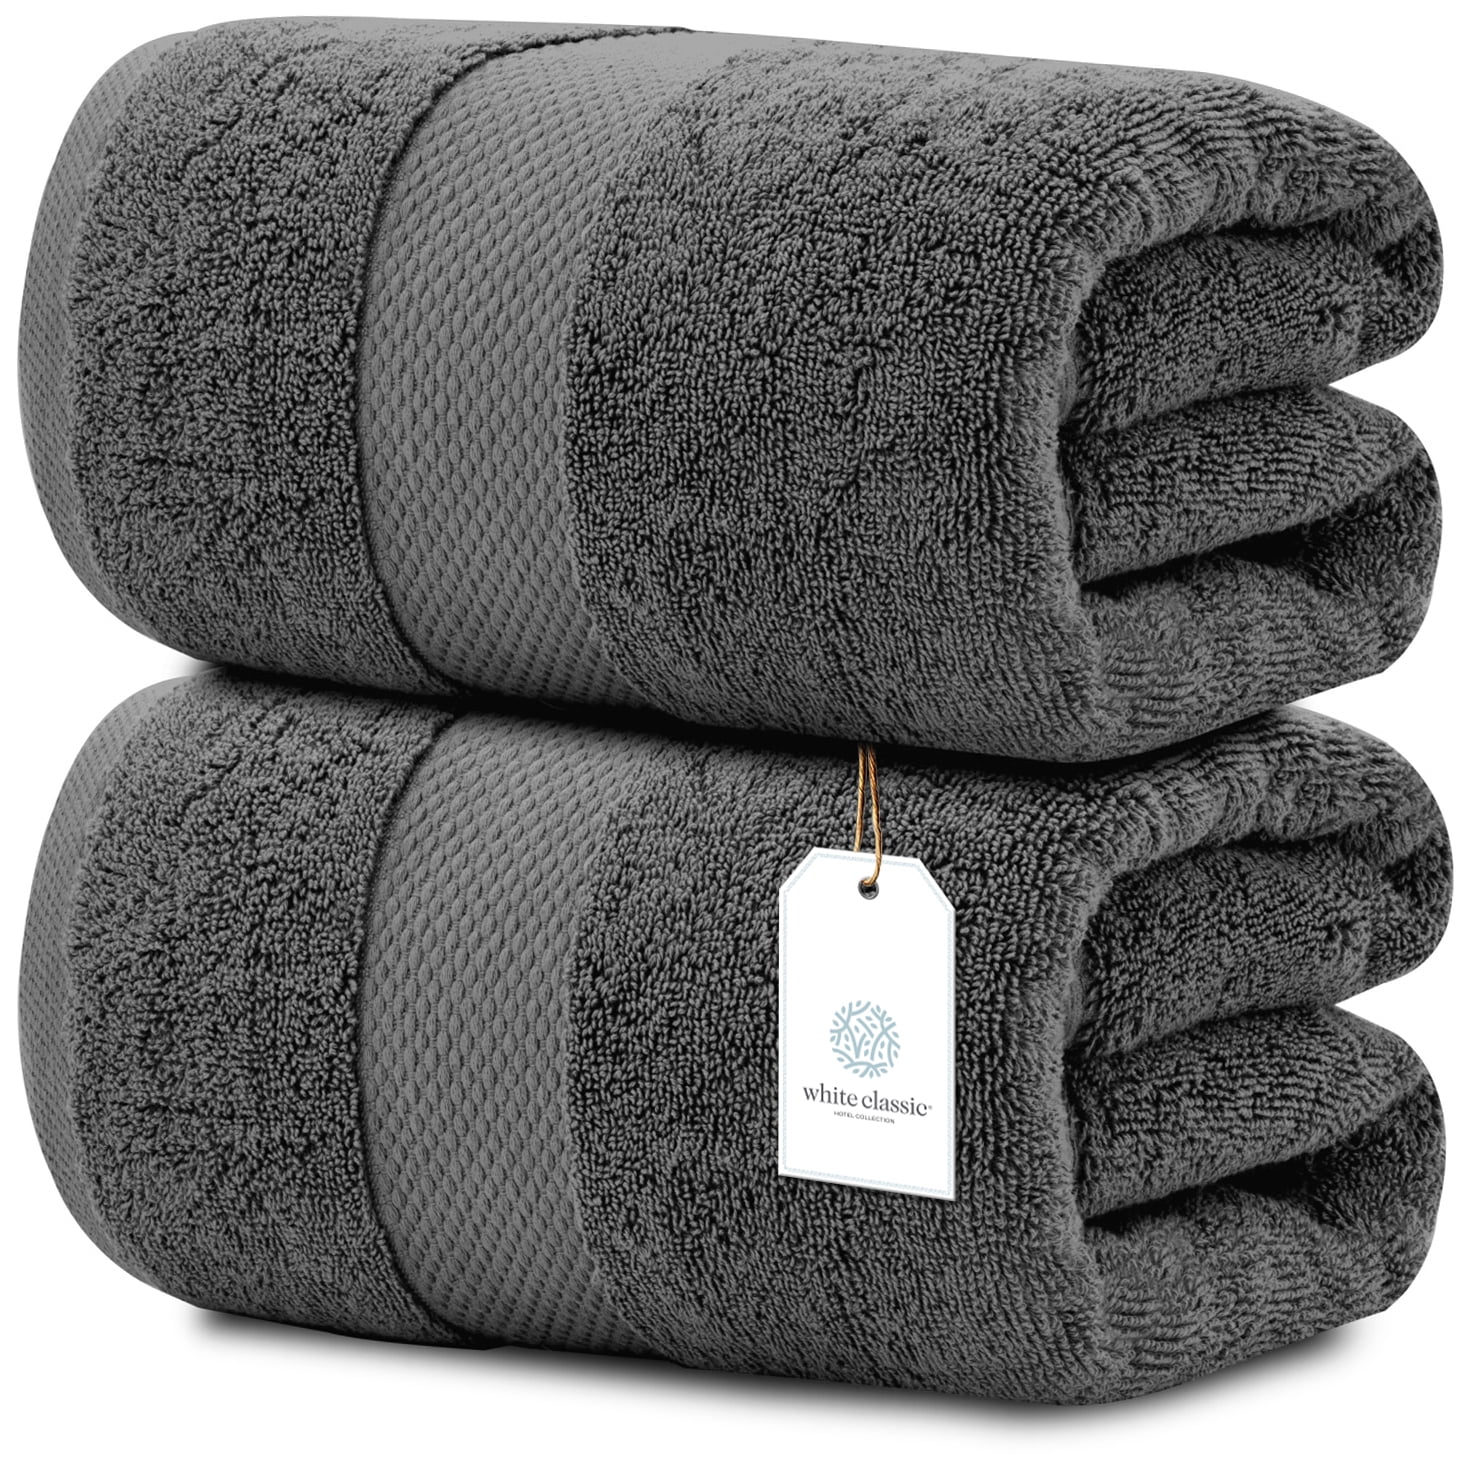 4 X Super Soft Cotton Towels Luxury Hand Face Bath towel Bath Sheet Jumbo Sheet 